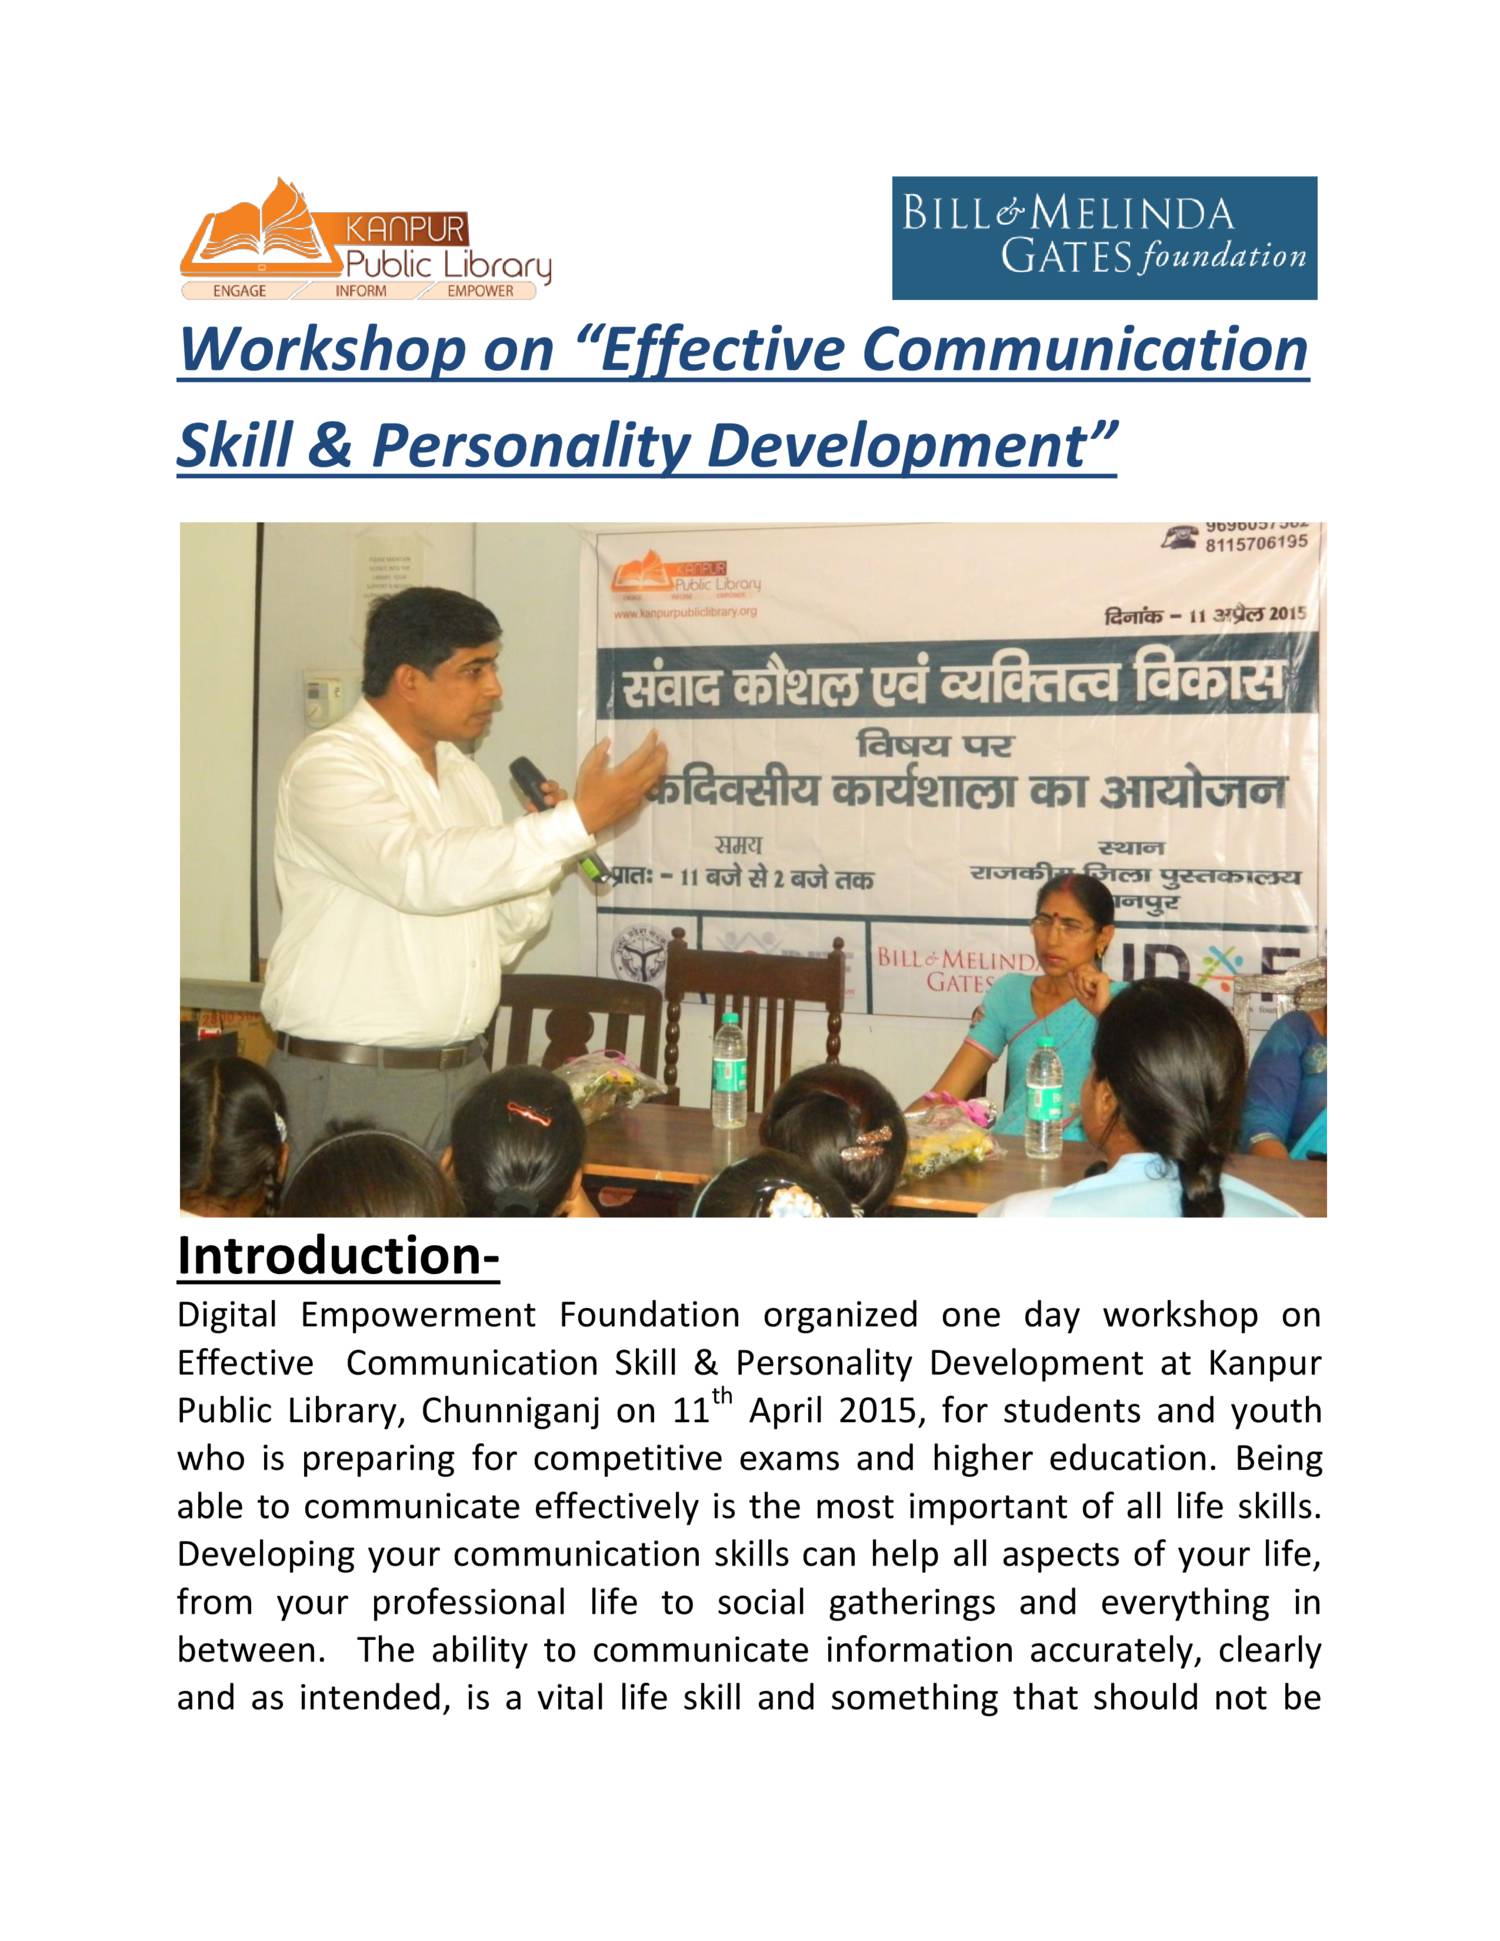 essay on communication skills and personality development